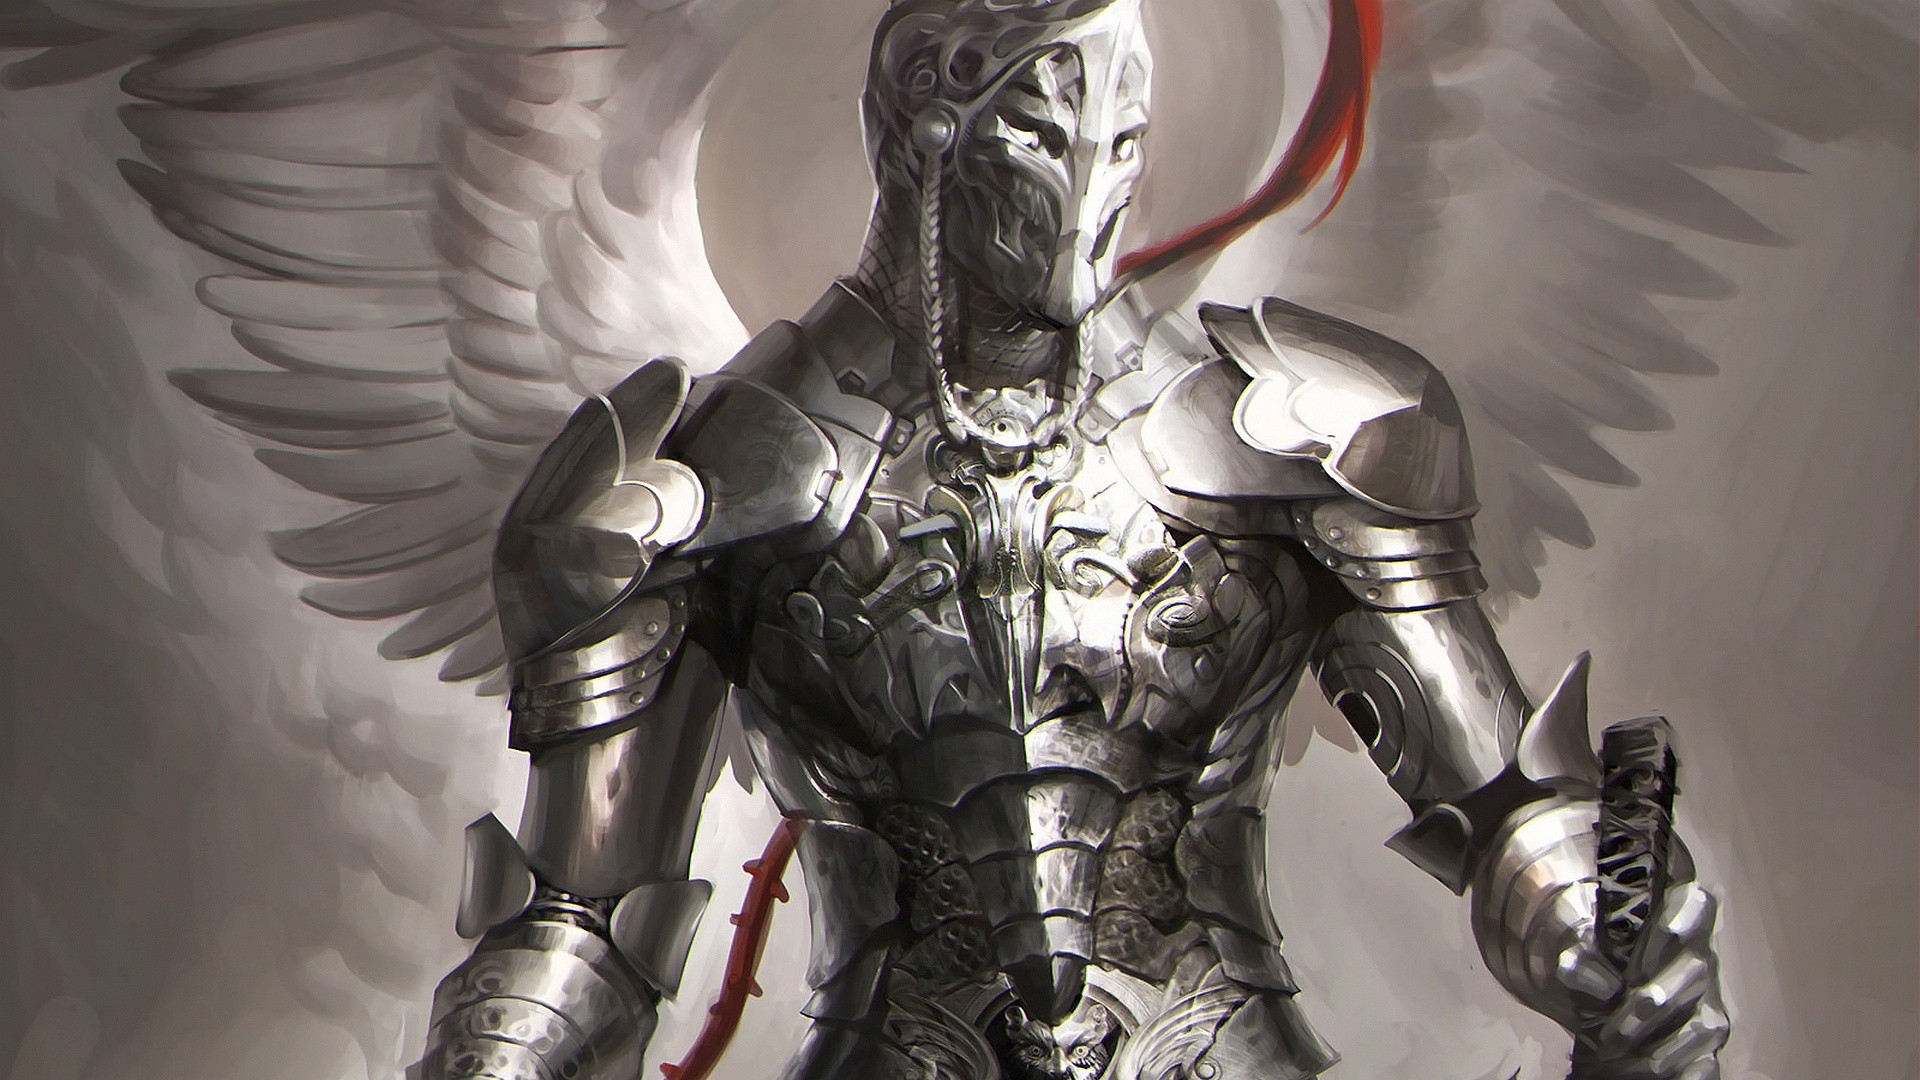 1920x1080 Warrior knight angel armor wallpaper |  | 37925 | WallpaperUP